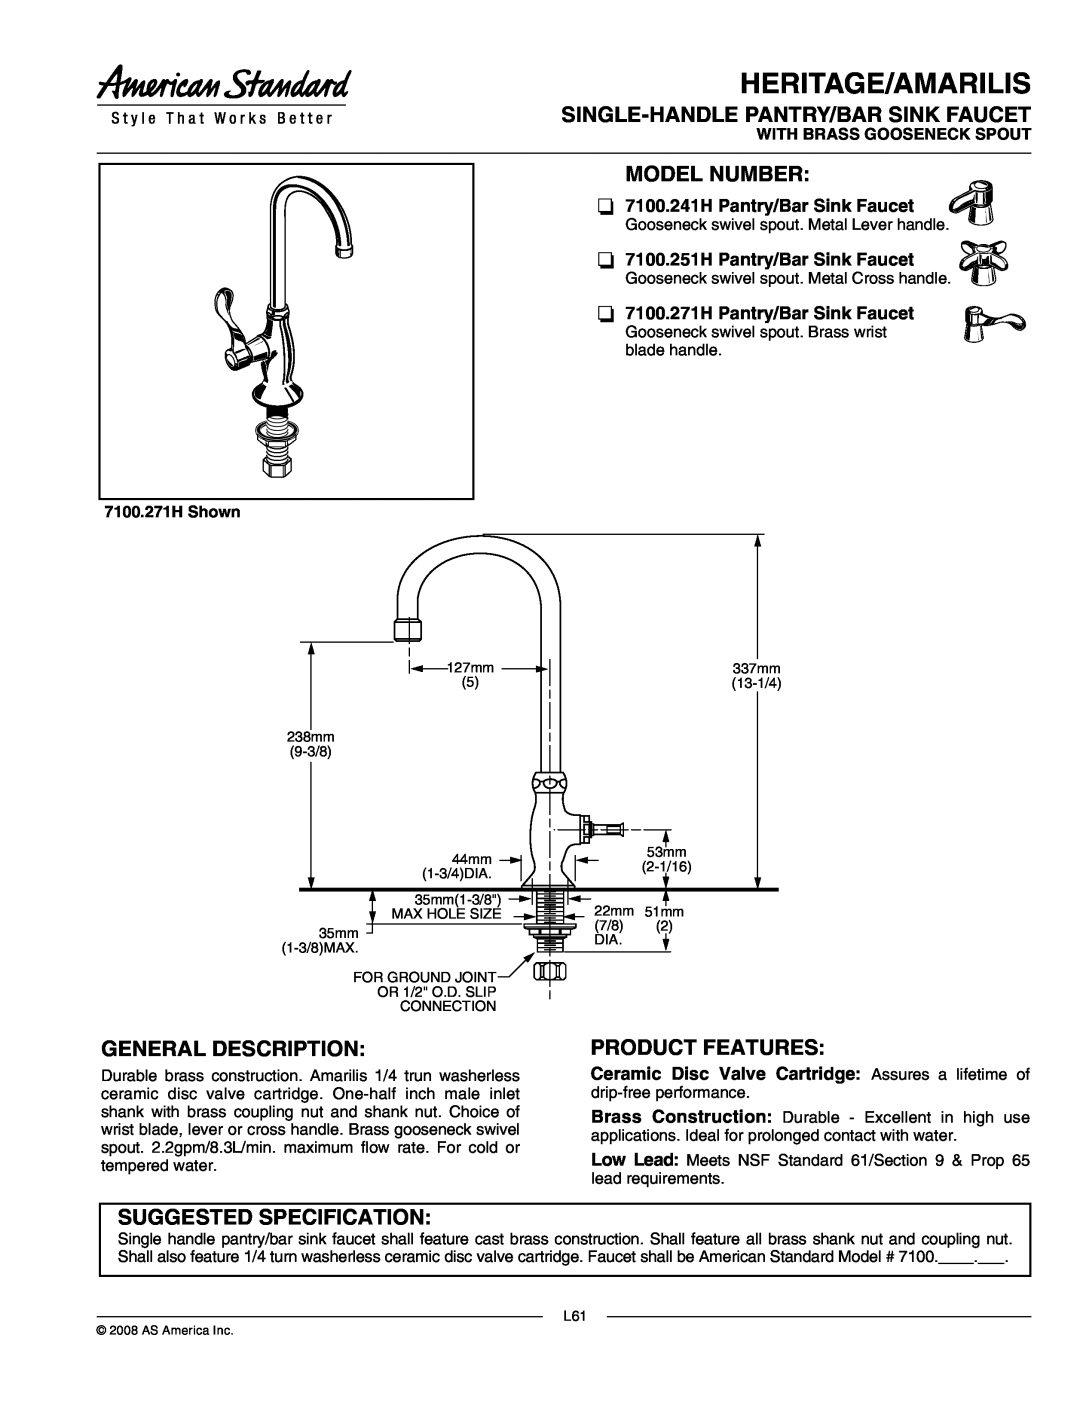 American Standard 7100.241H, 7100.251H specifications Heritage/Amarilis, Single-Handlepantry/Bar Sink Faucet, Model Number 